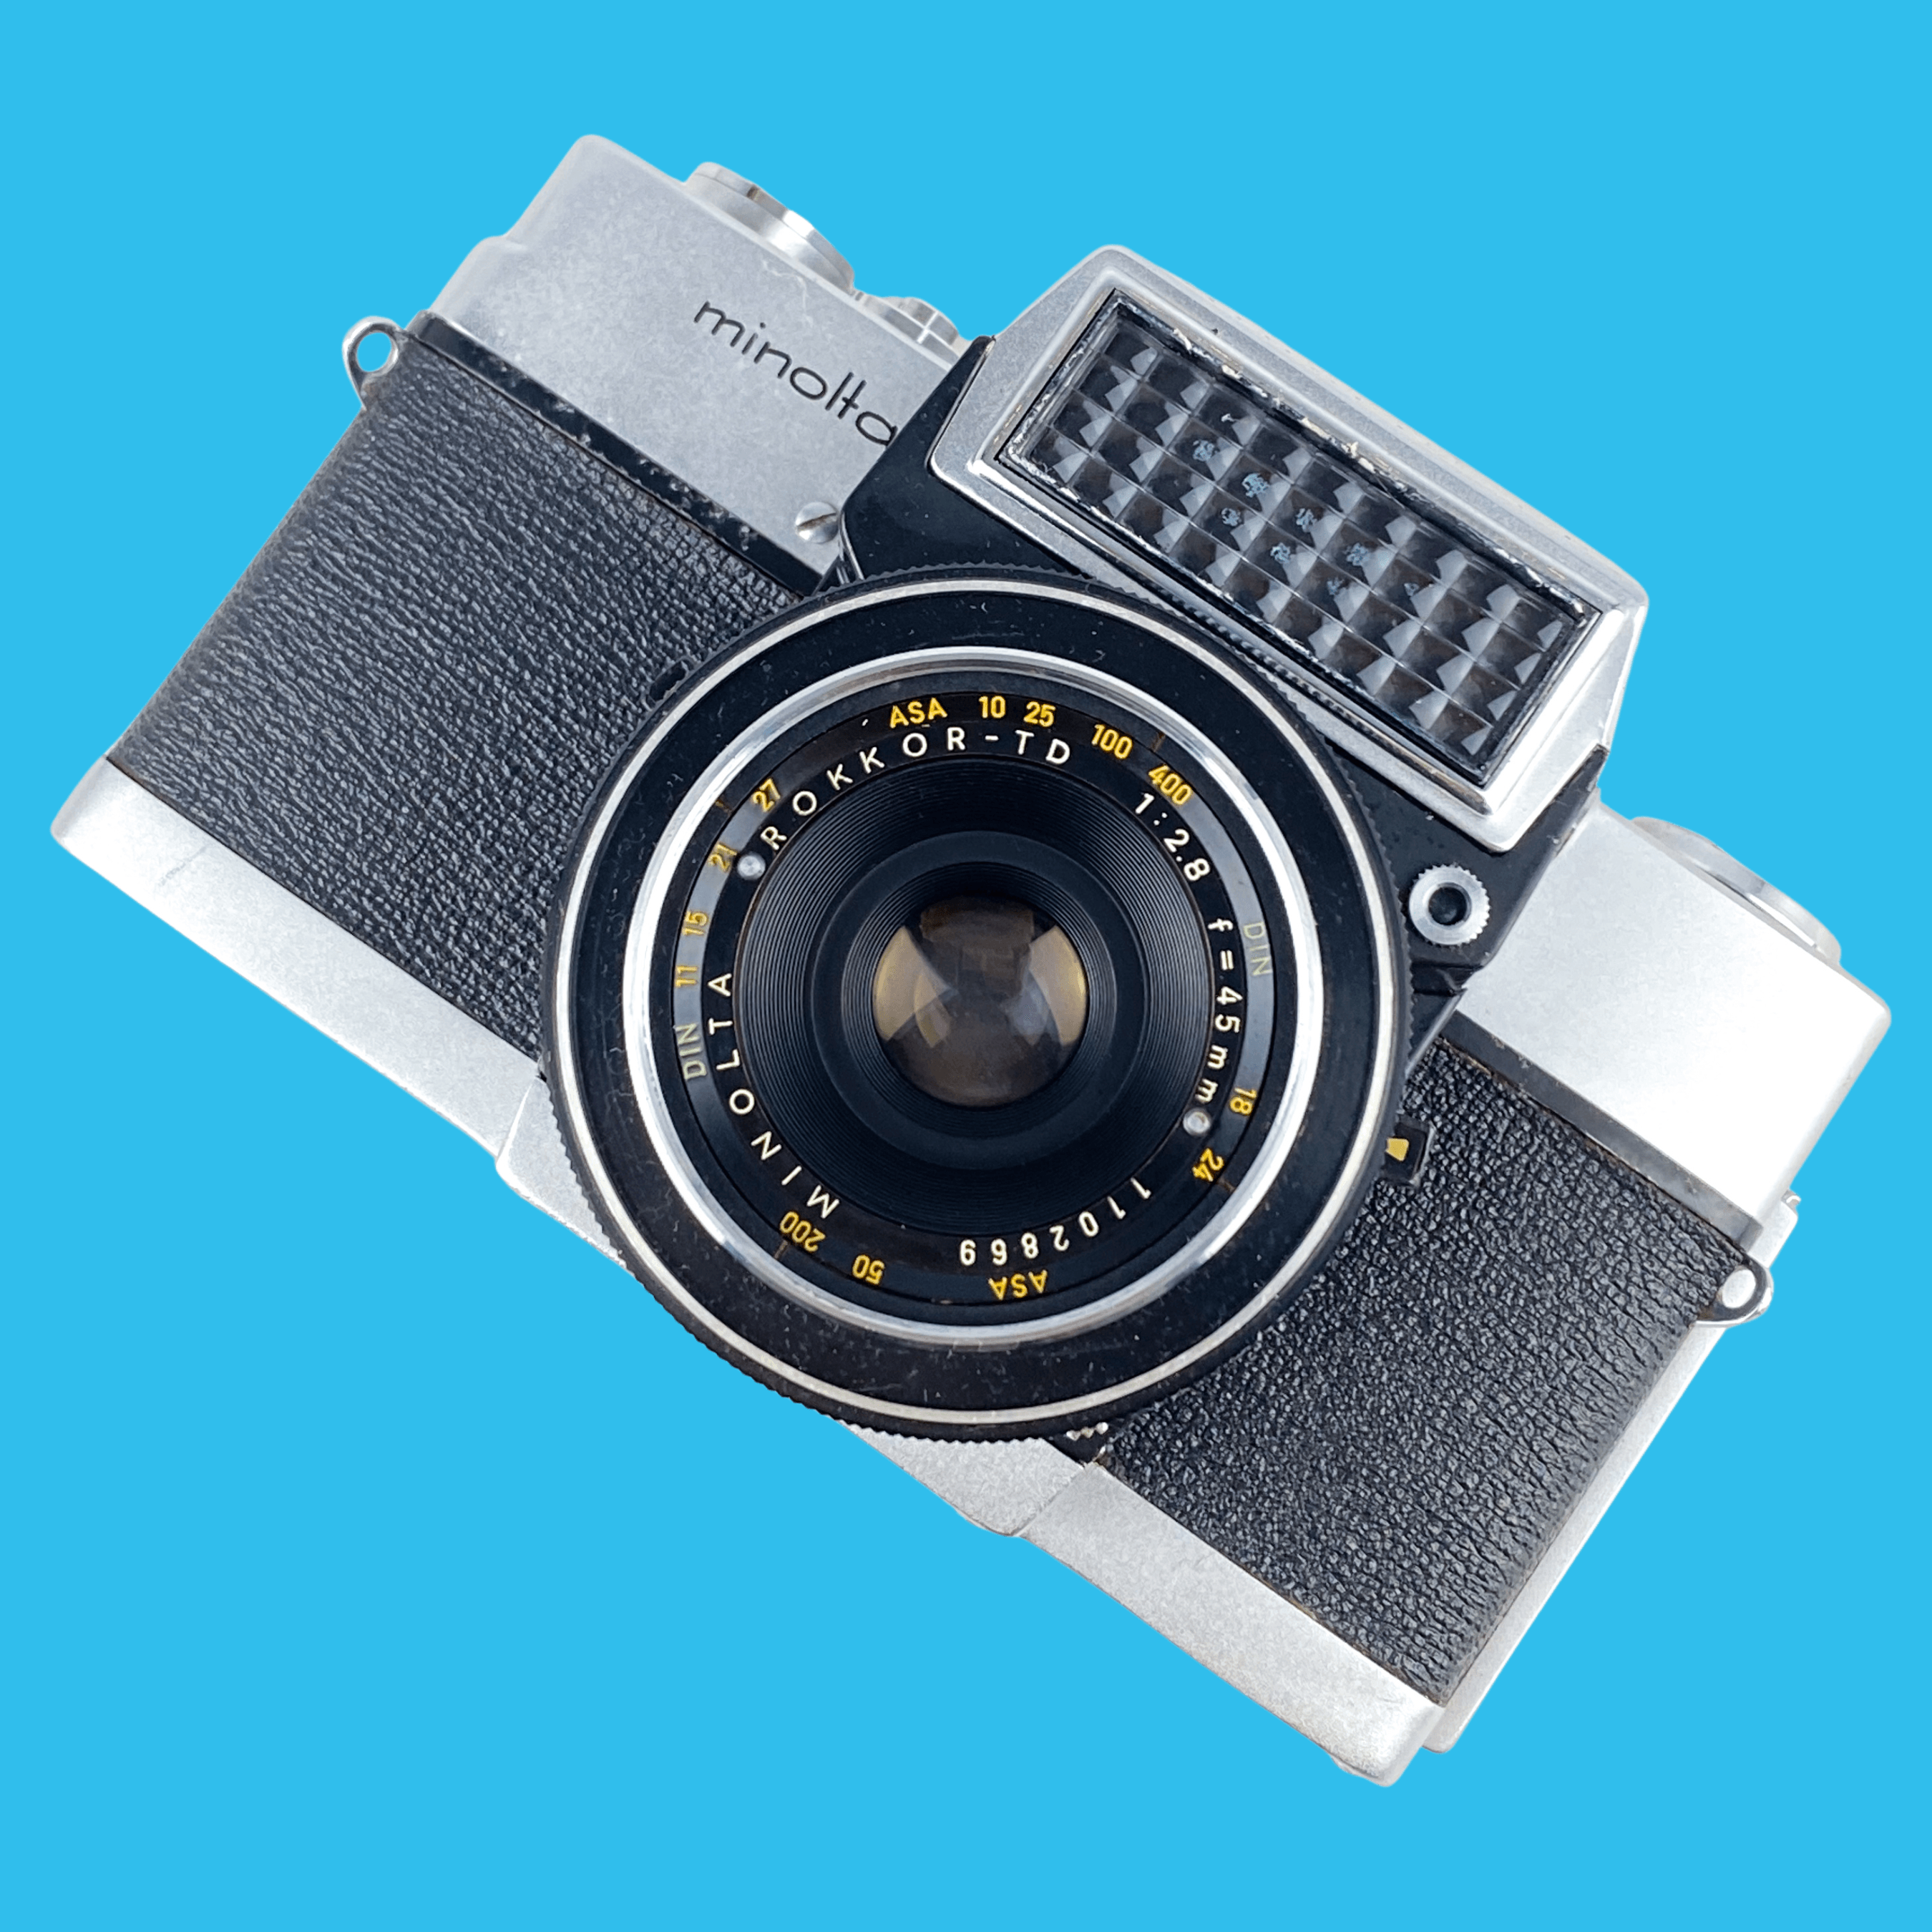 Focus sur l'appareil photo argentique Minolta Weathermatic Dual 35